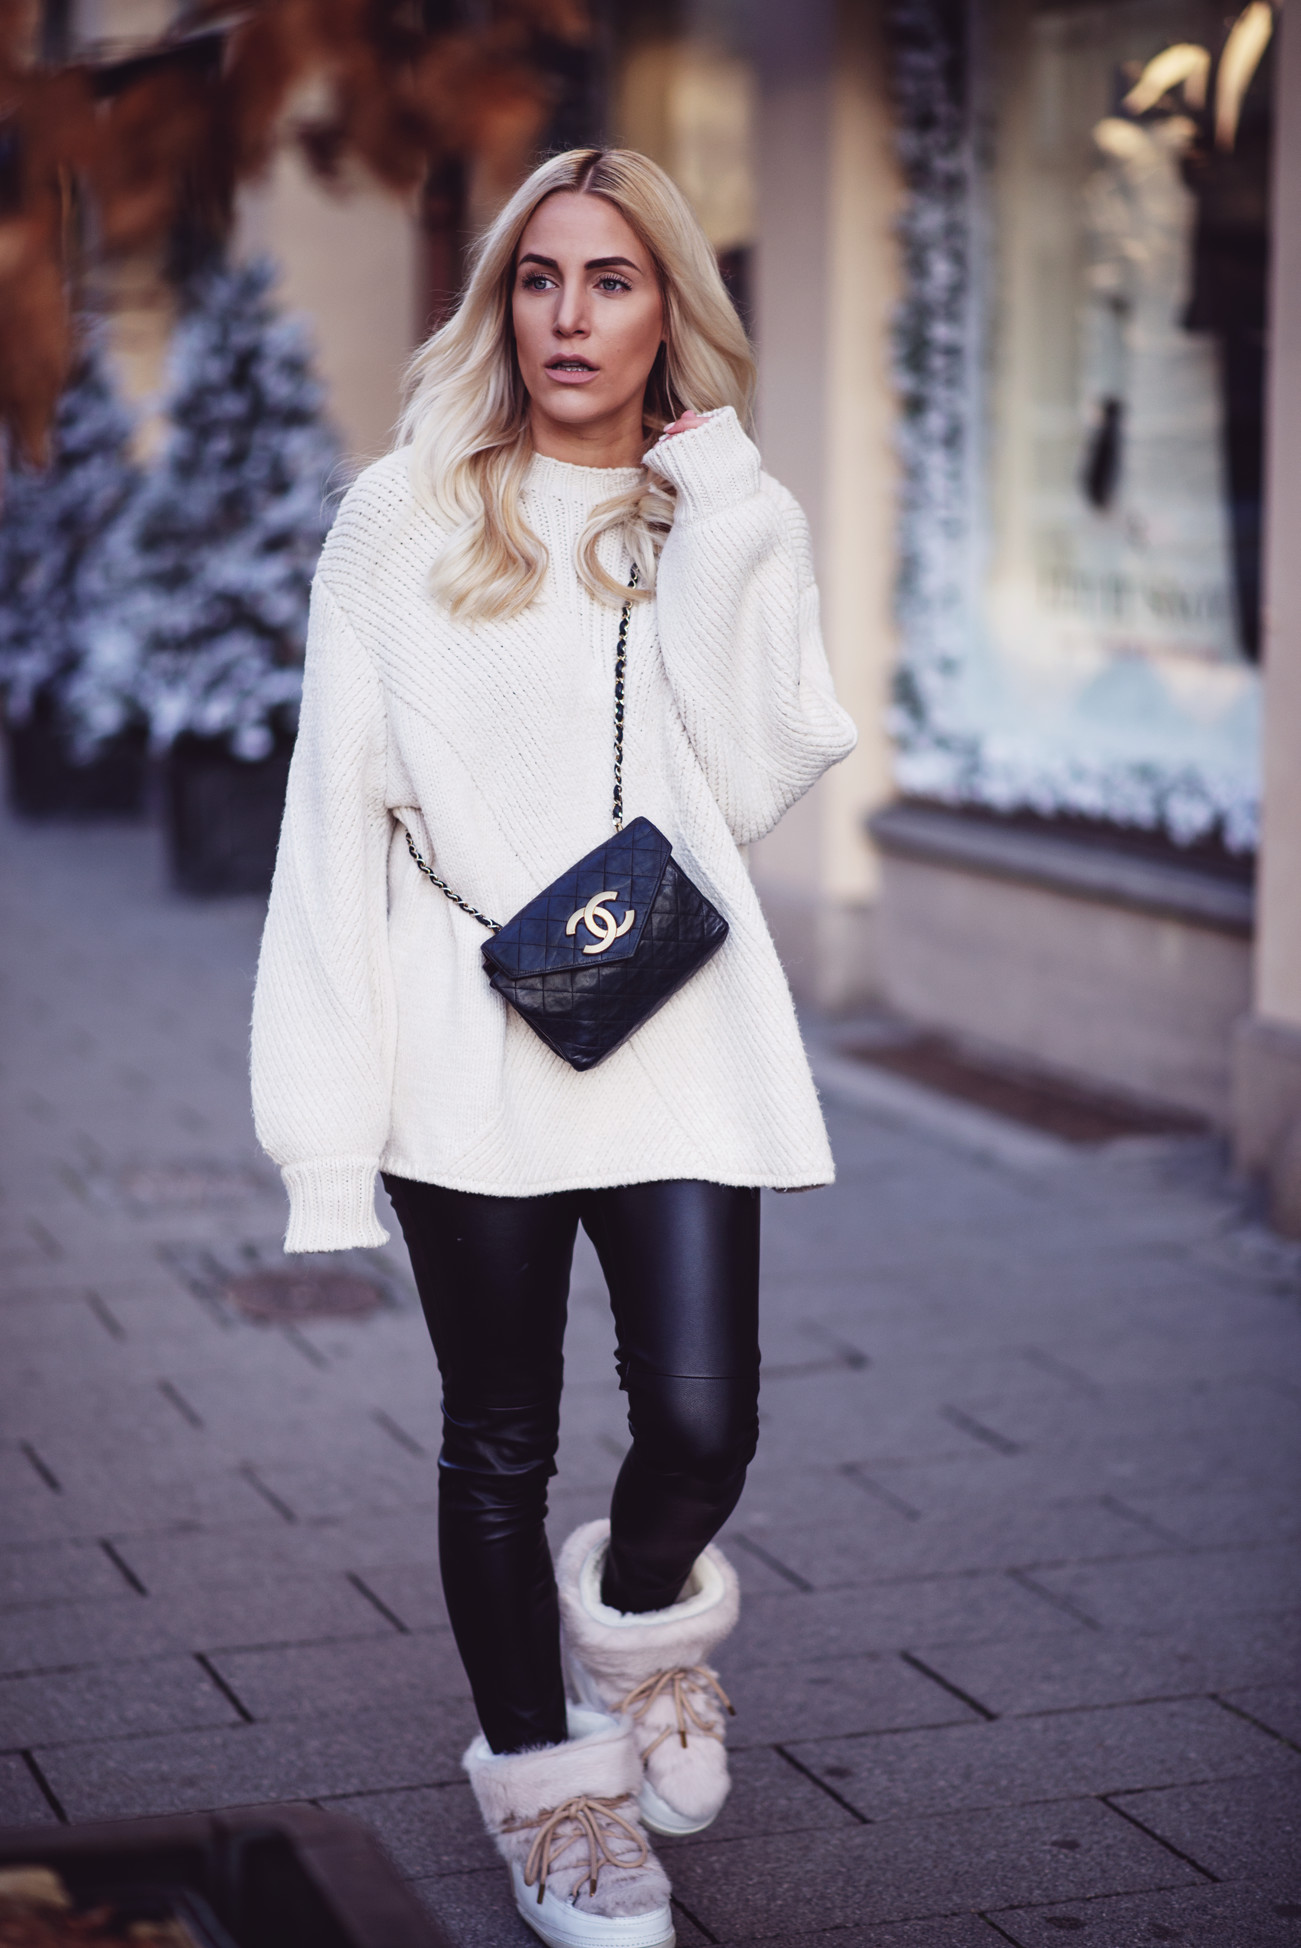 fashion-fashionblogger-blogger-chanel-winter-cozy-knitwear-leo-sequinsophia-6-dsc_6260